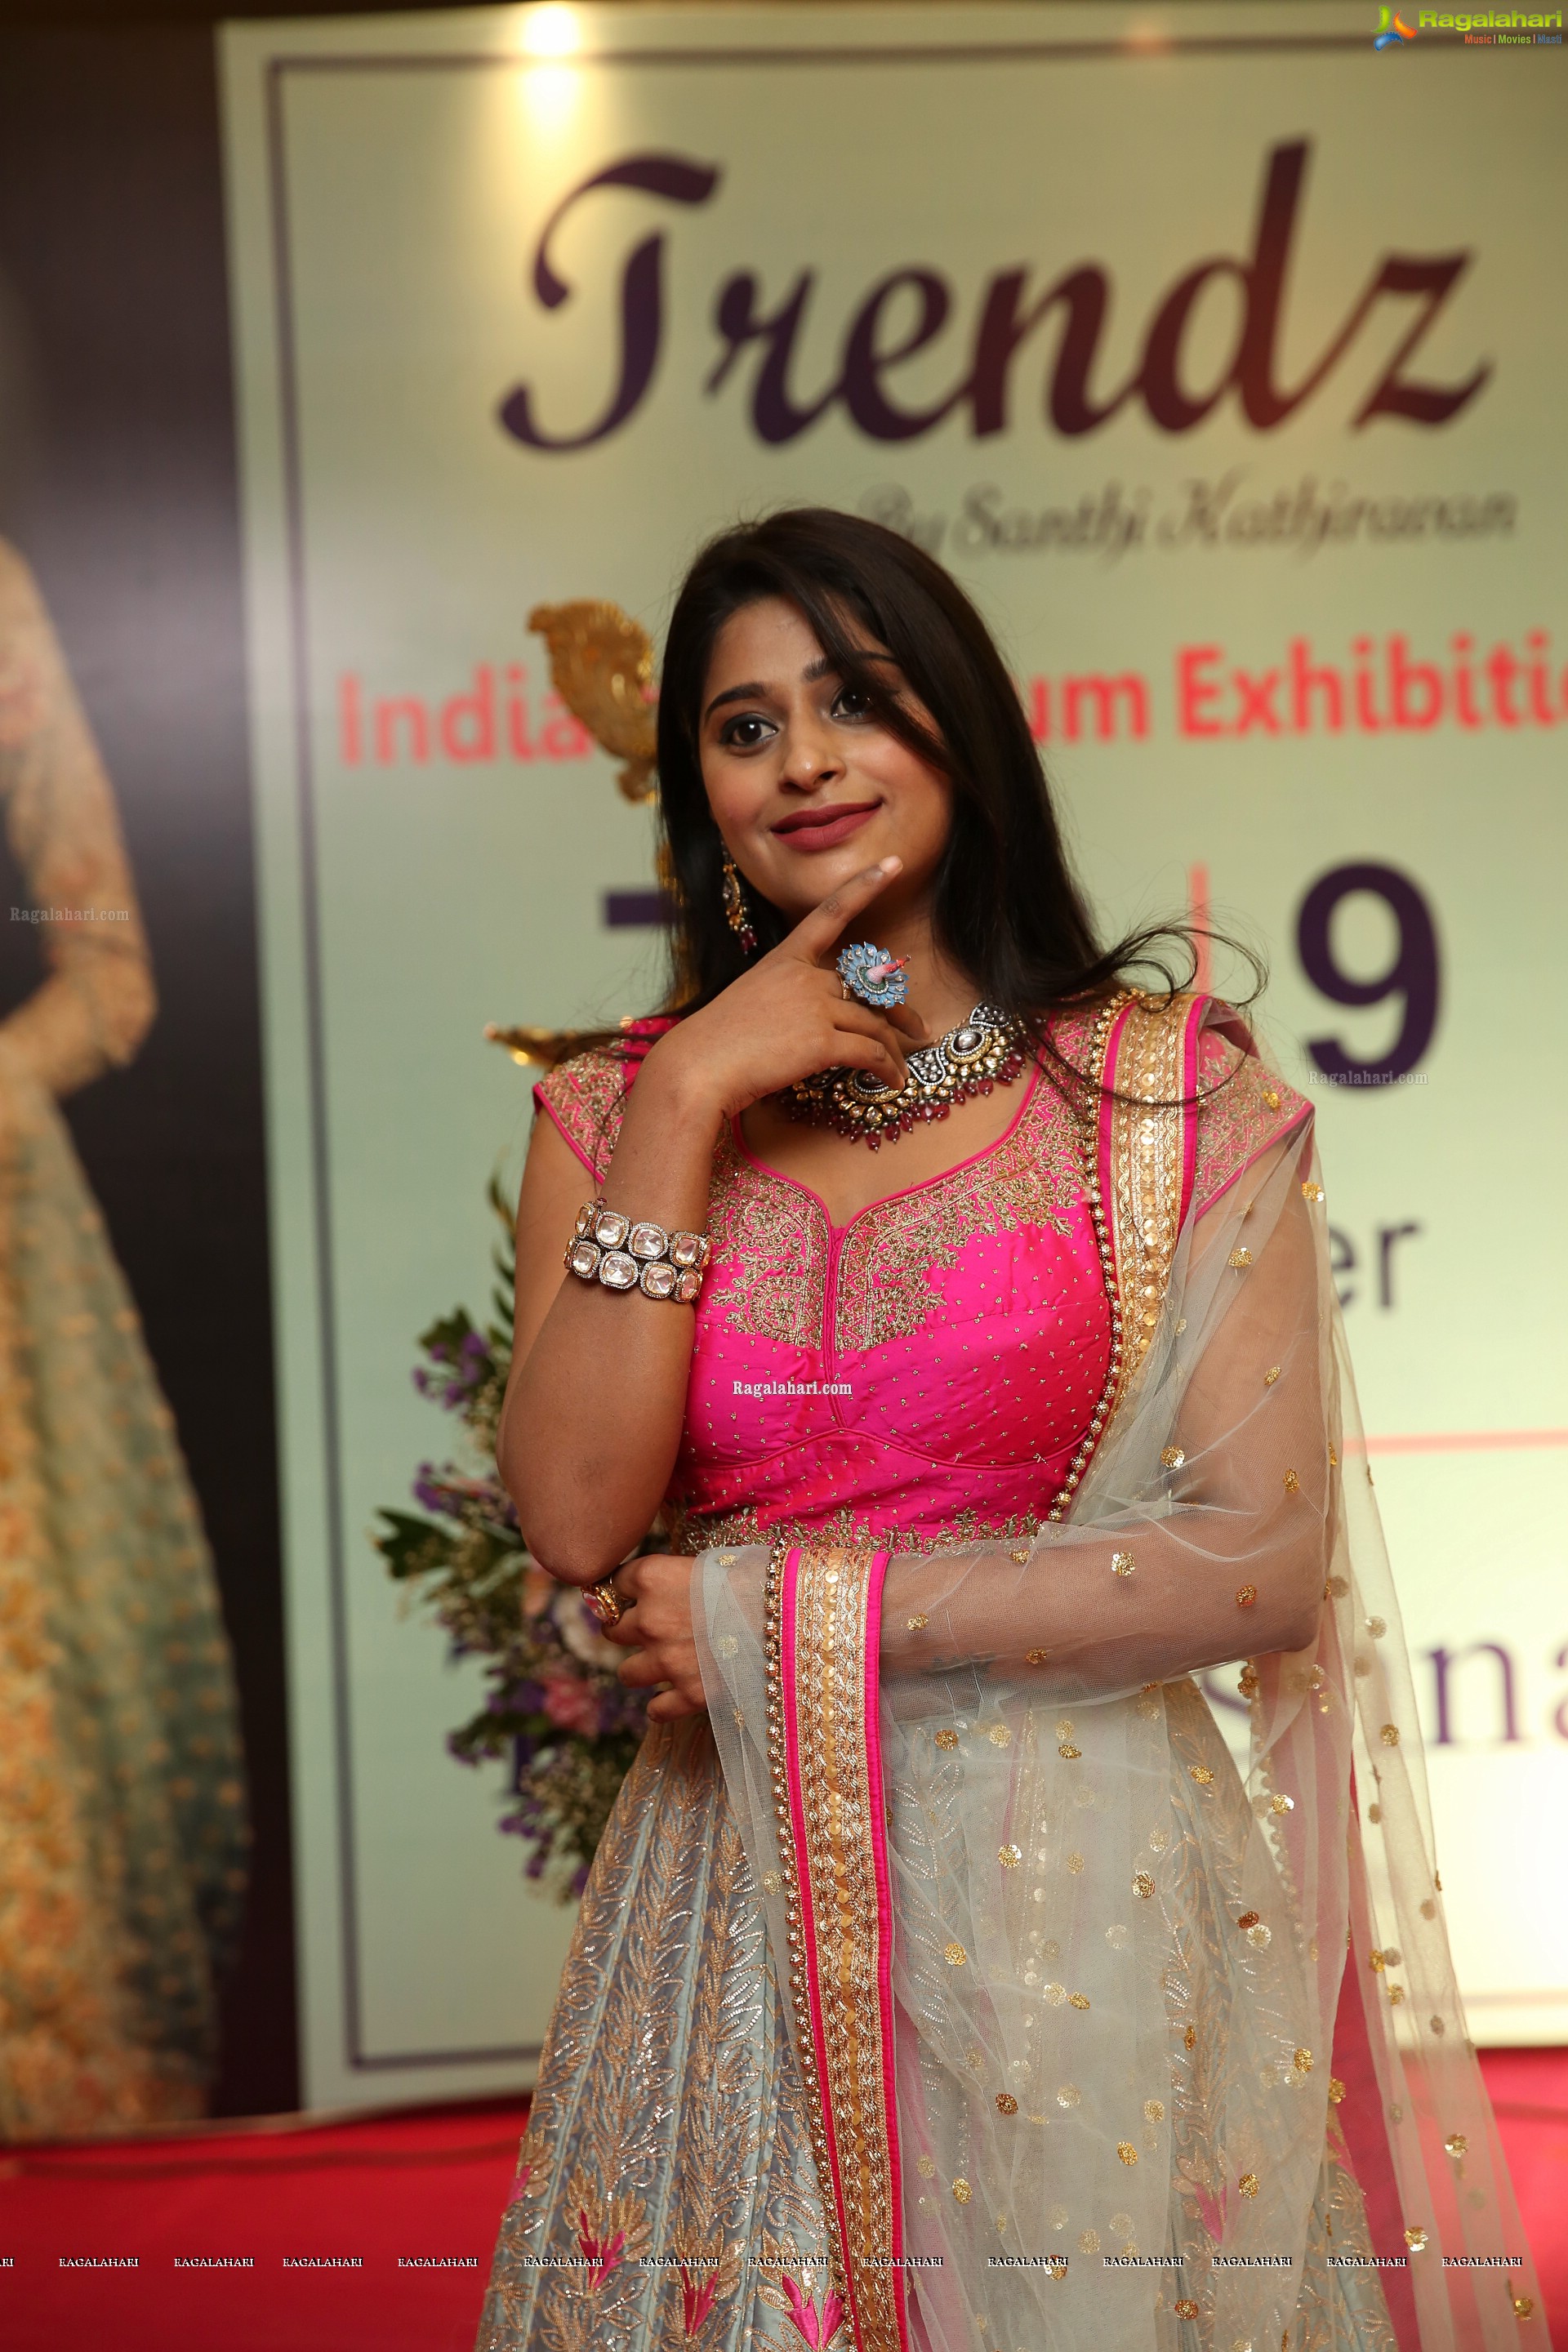 Shravani Varma at Trendz Exhibition Launch - HD Gallery